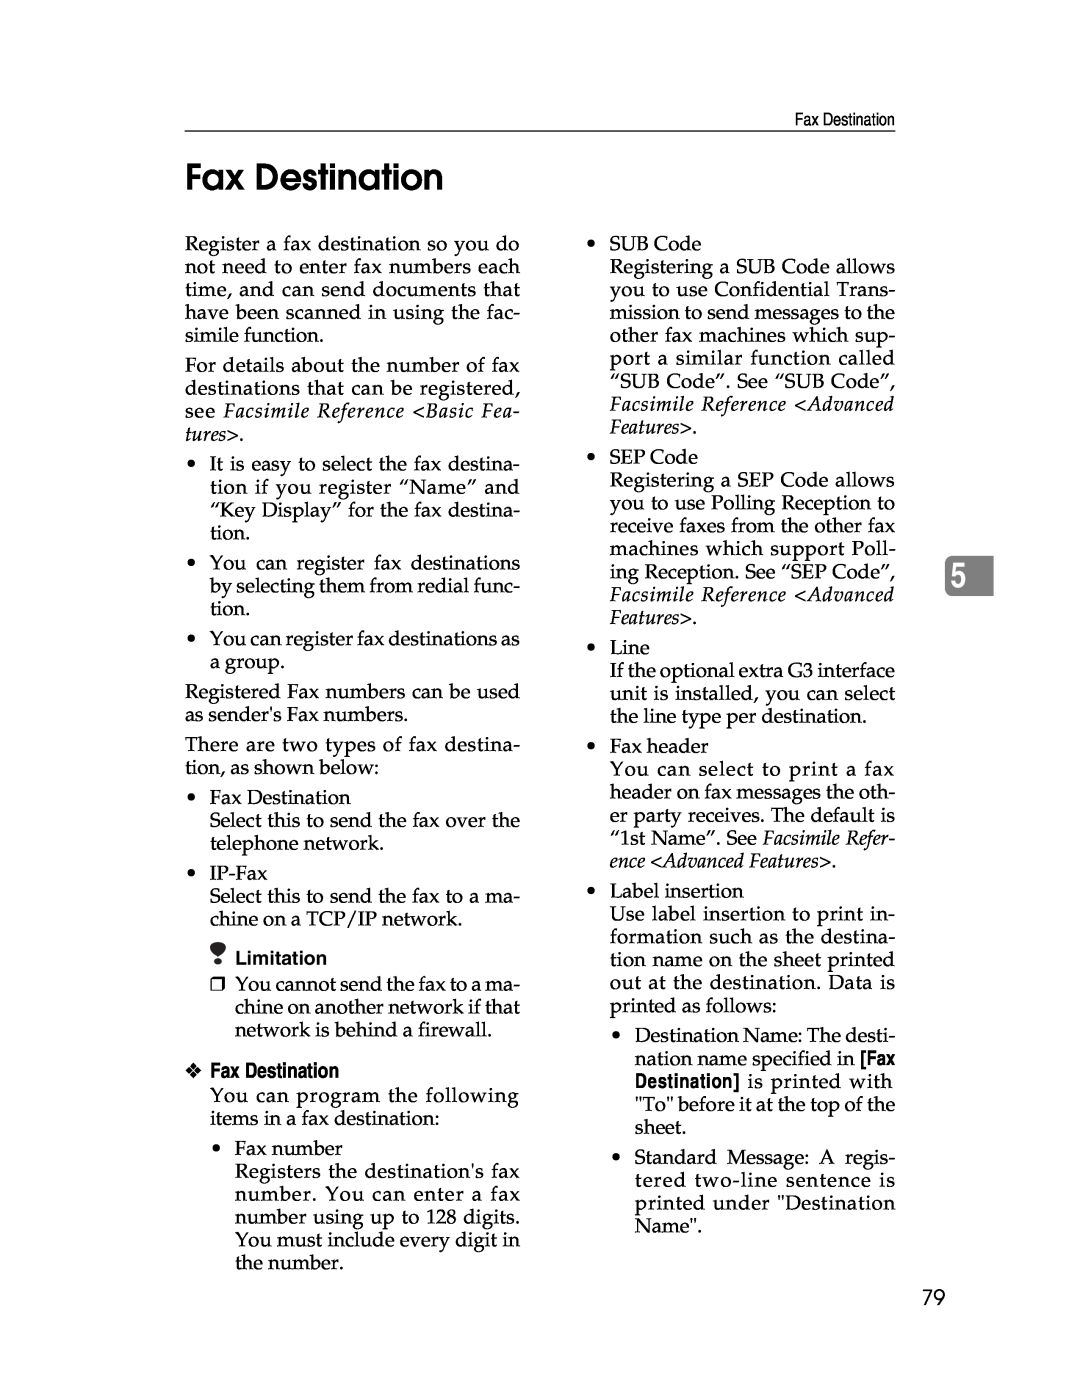 Lanier LD230, LD225 manual Fax Destination, Limitation 